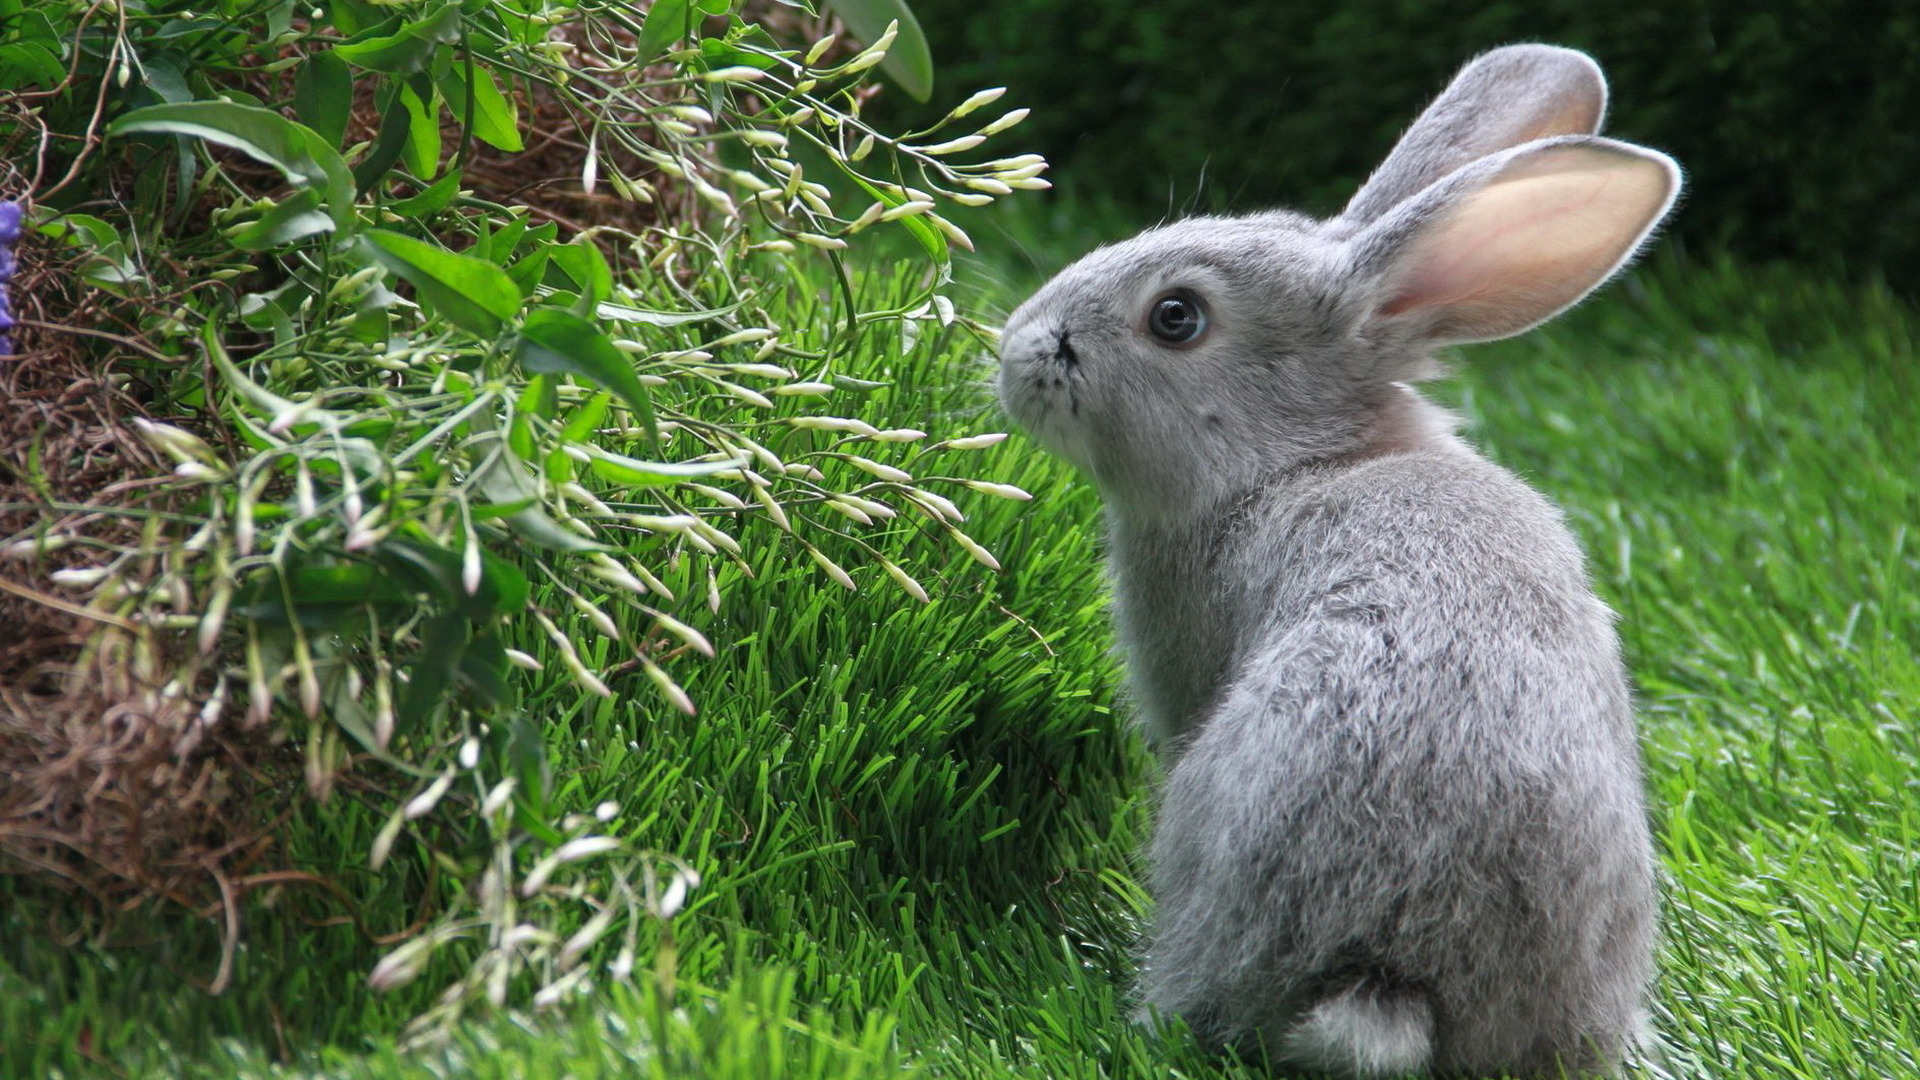 bunnies, animals, grass, rabbits - desktop wallpaper